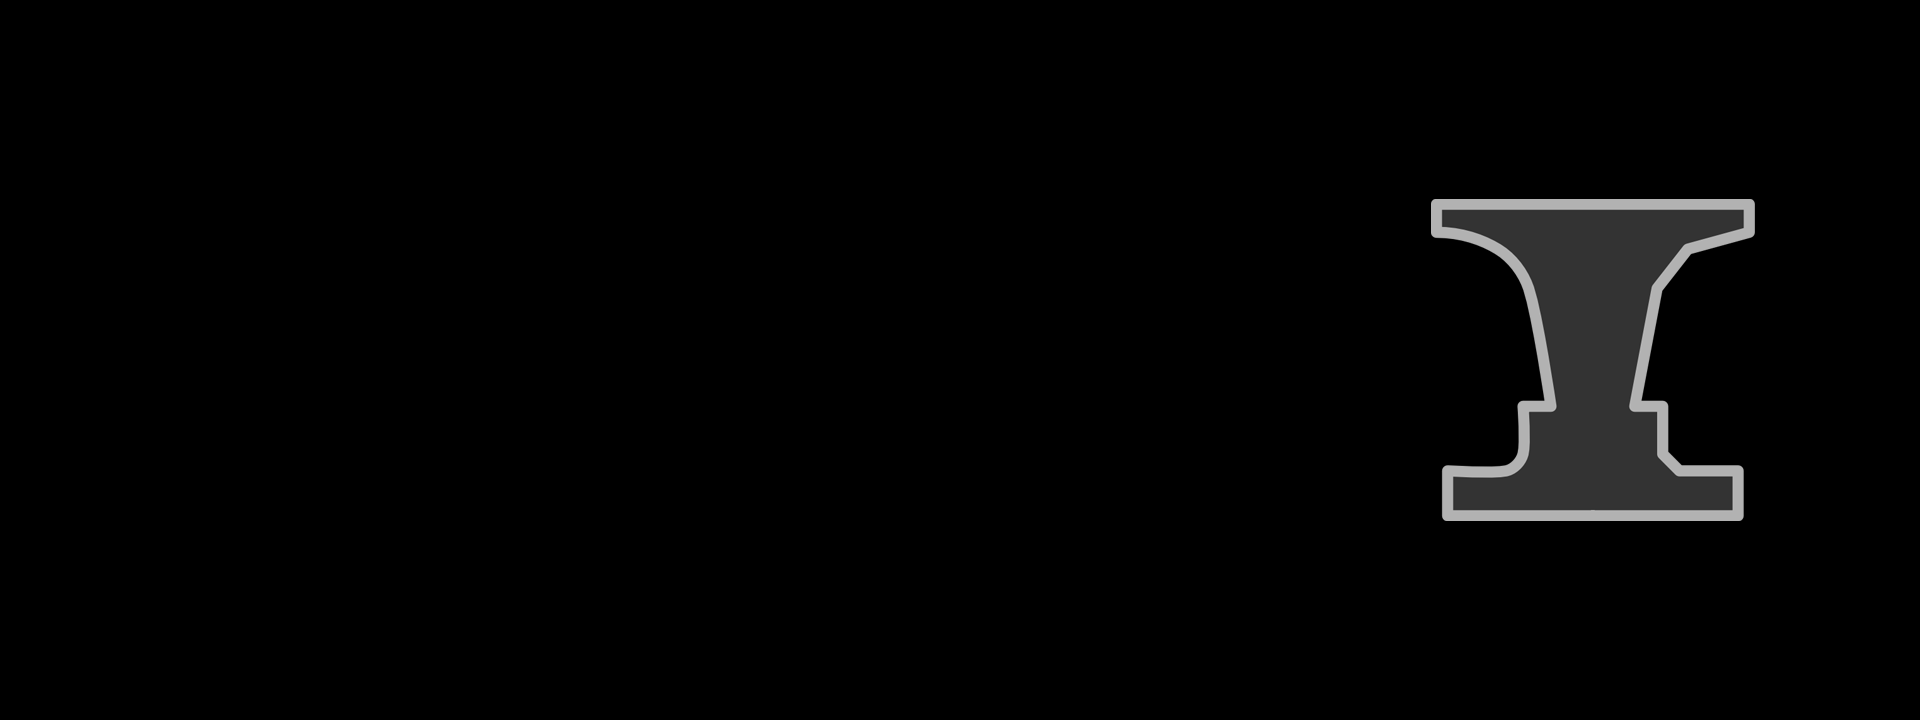 GRAIL group header - outline of a grail on black background